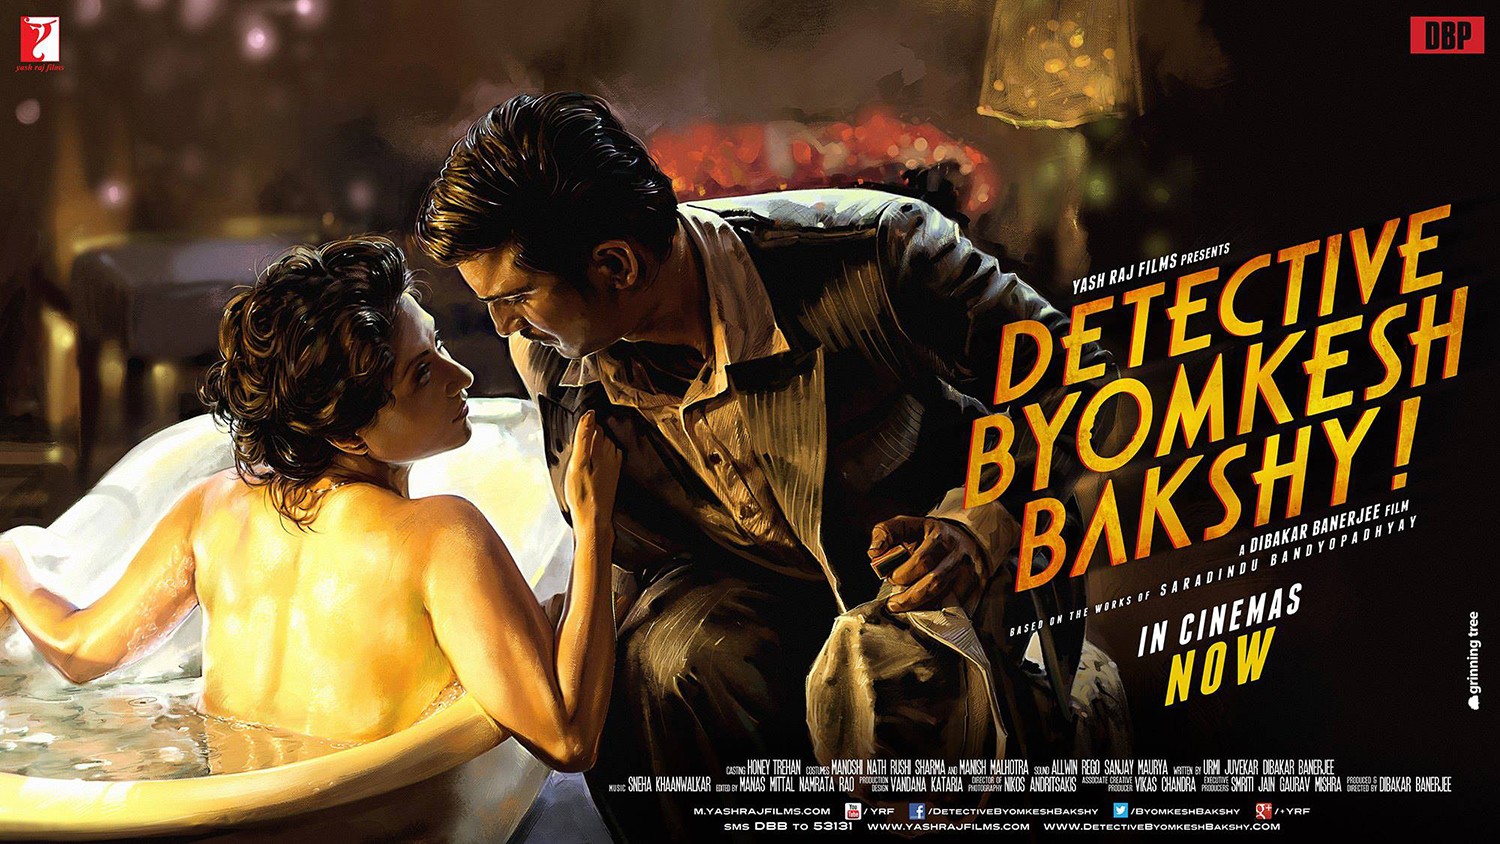 Extra Large Movie Poster Image for Detective Byomkesh Bakshy! (#6 of 8)